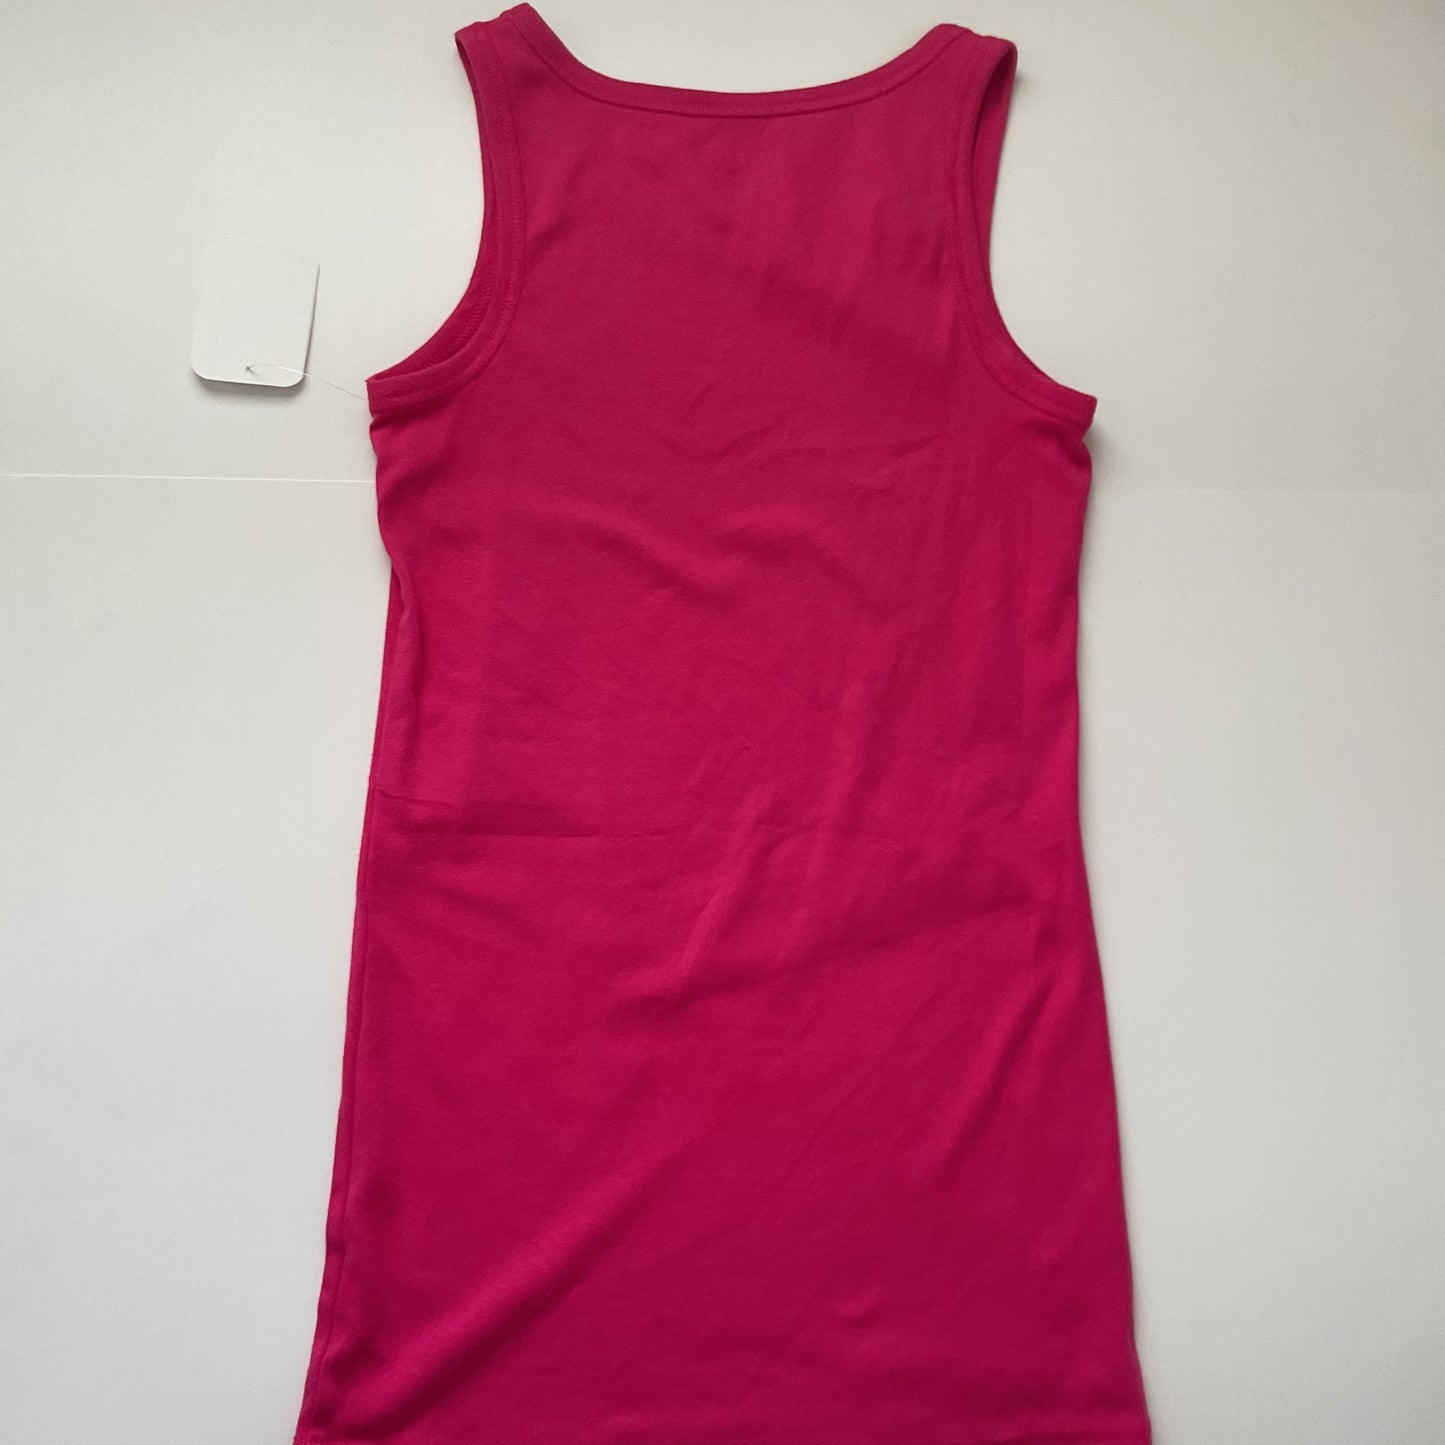 Cat & Jack Sleeveless Girls T-shirt Size XL(14/16).